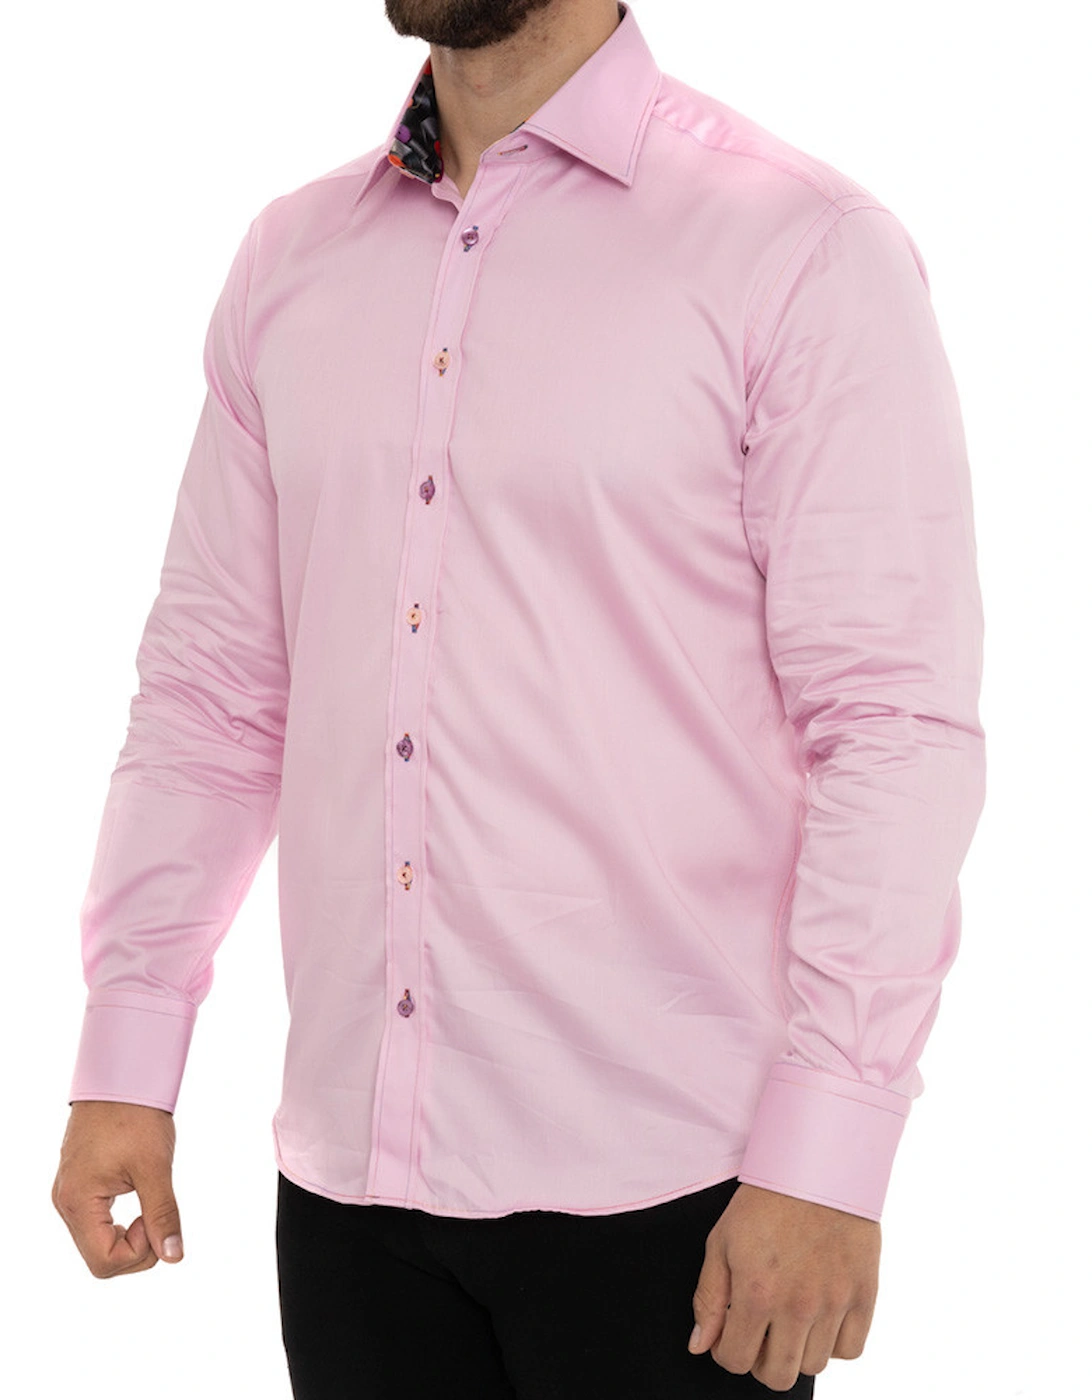 Mens Vinyl Trim Shirt (Pink)